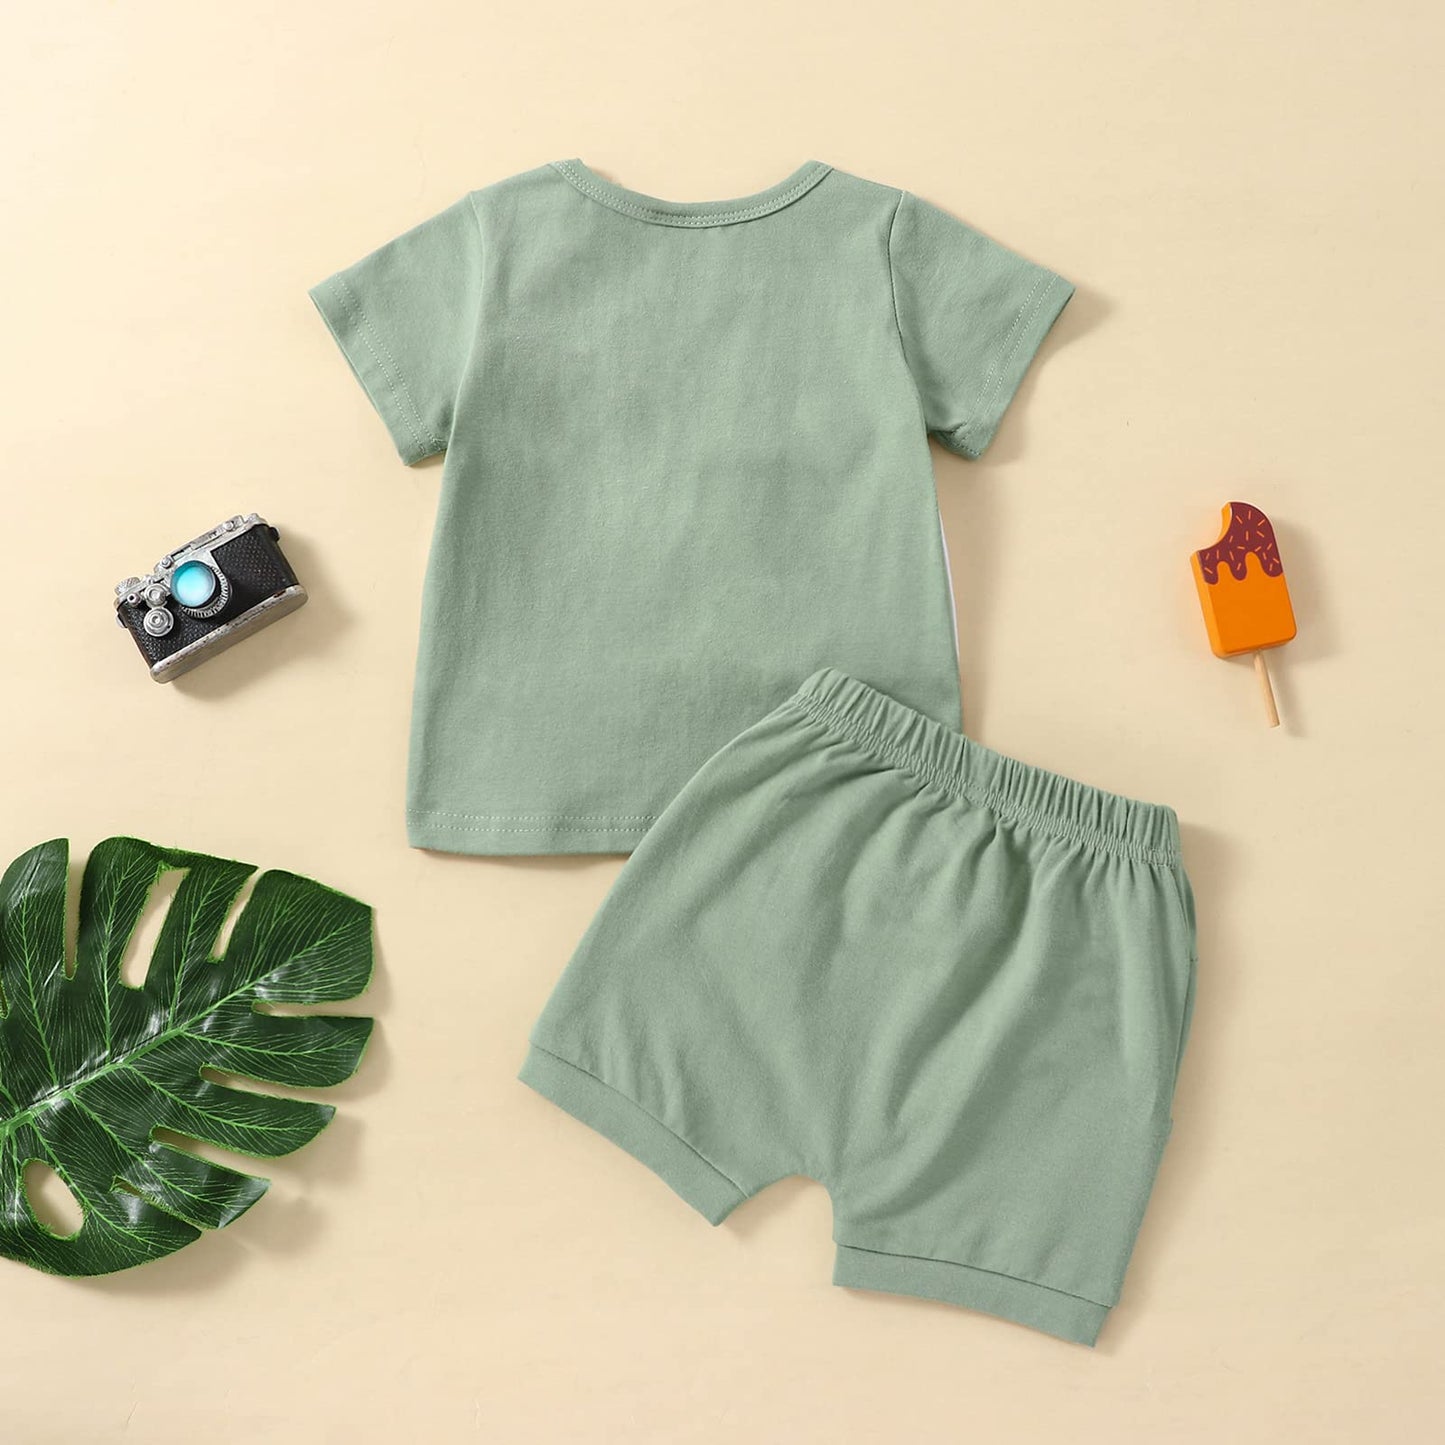 Baby Boy Summer Clothes Block Color Striped Print Pocket T Shirt Tops Drawstring Shorts Set Toddler Casual Outfits 0-6M